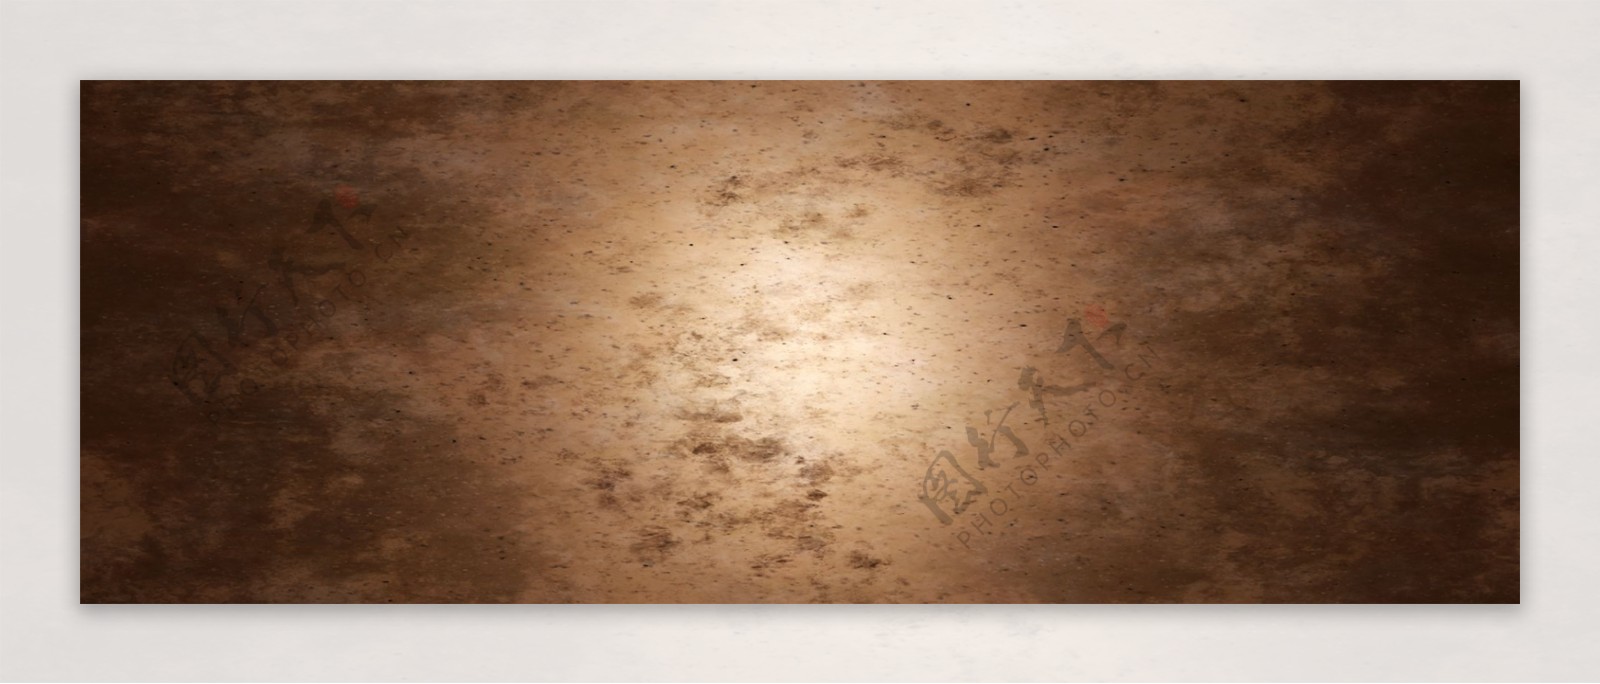 棕色锈蚀纹理金属材质质感banner背景